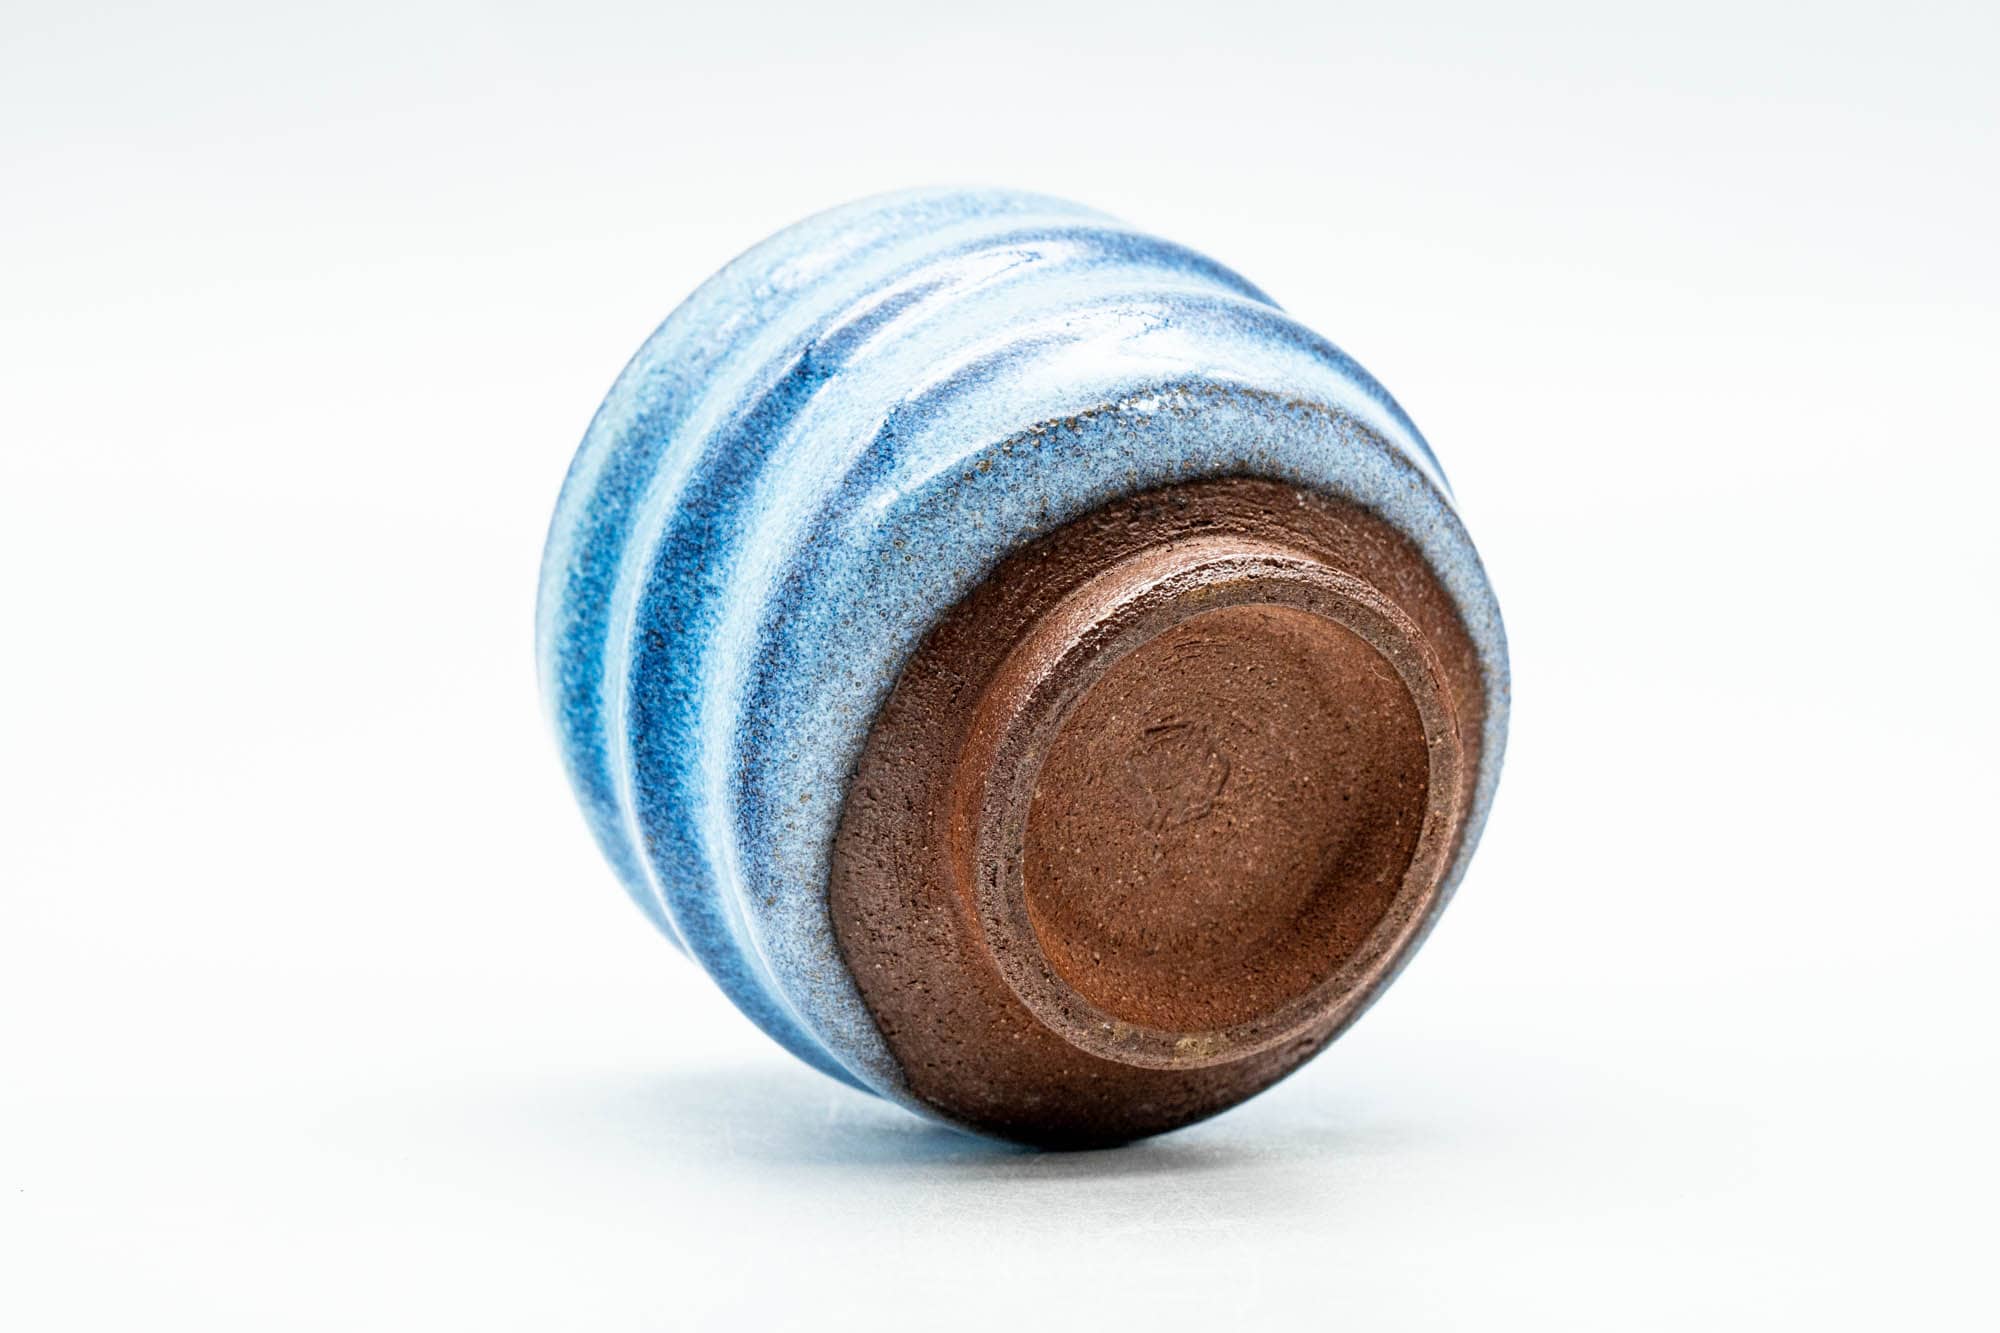 Japanese Teacup - Blue Shino Glazed Spiraling Guinomi - 60ml